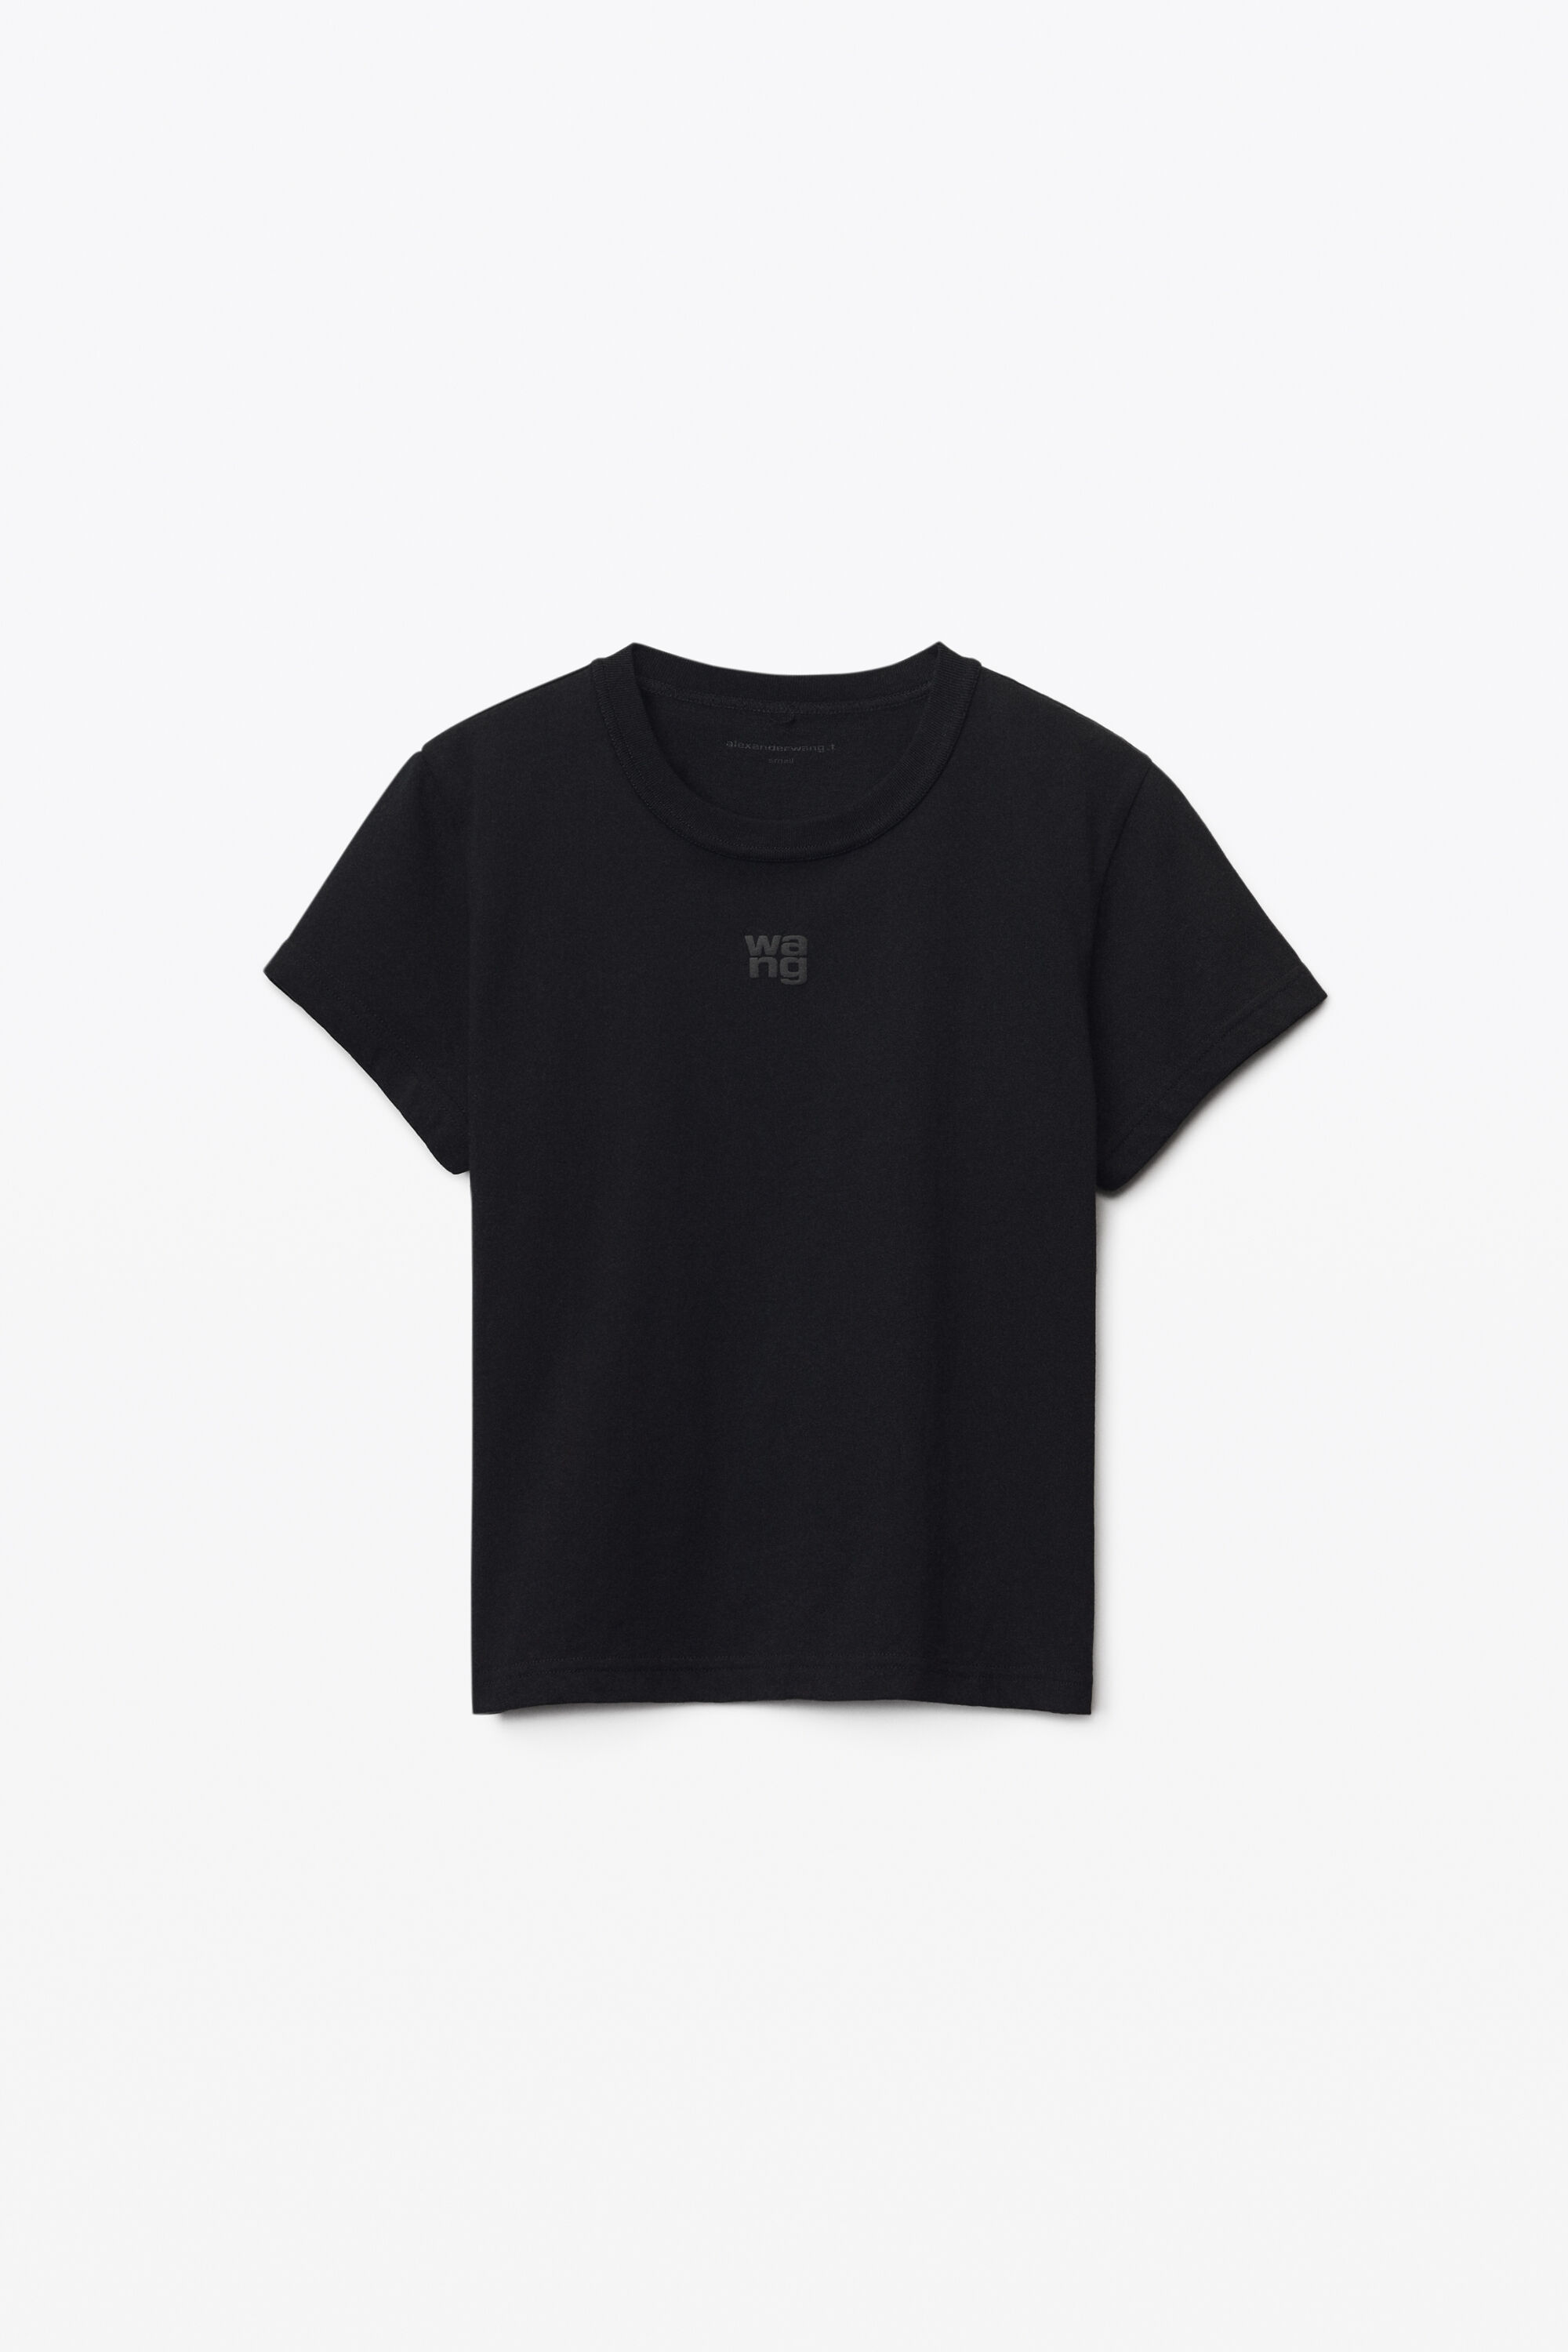 Alexanderwang black T shirt